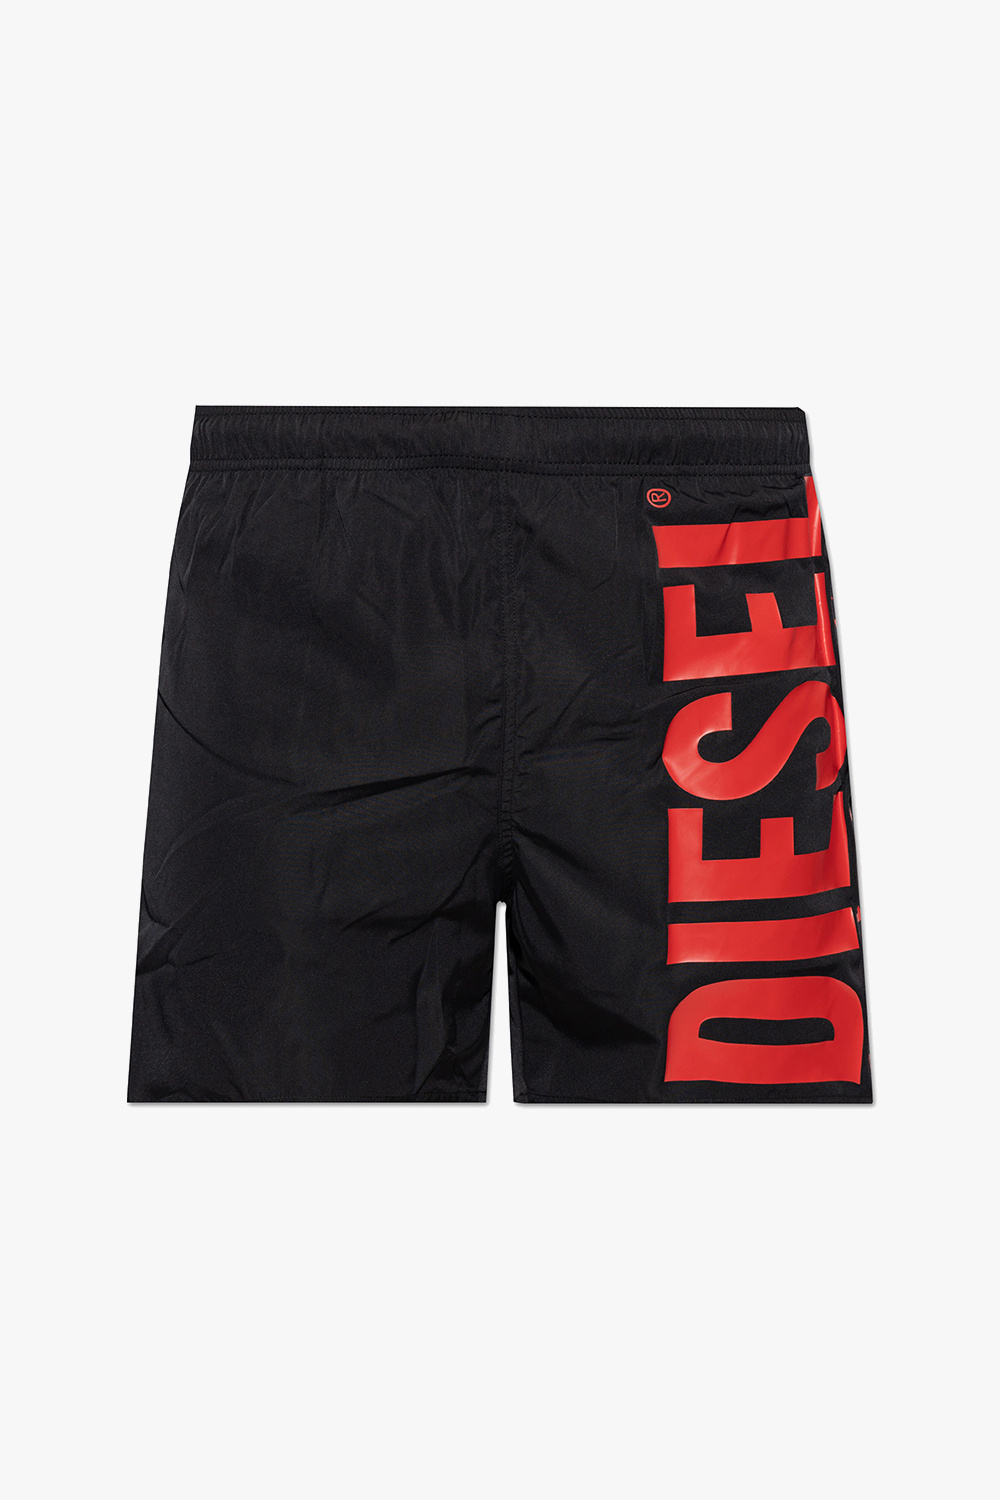 Diesel ‘Bmbx-Wave-Wf’ swim shorts